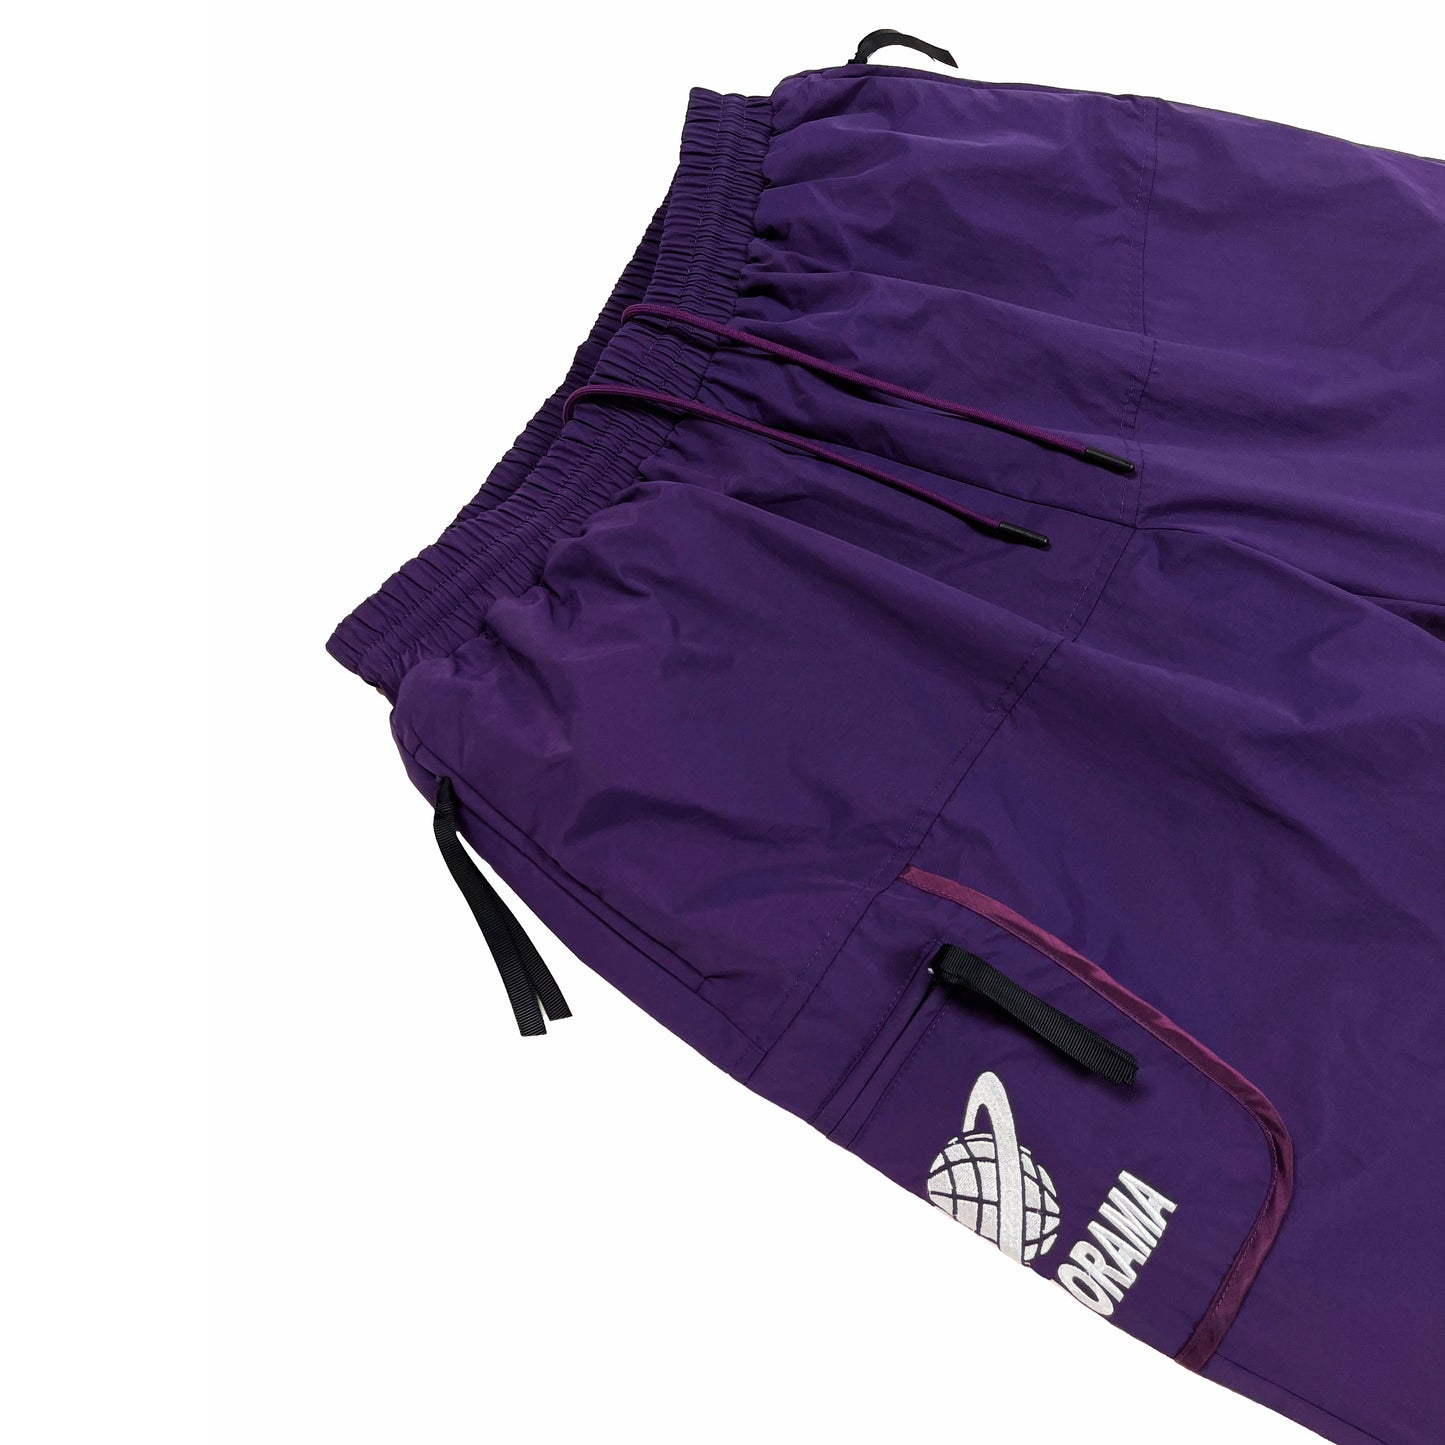 Purple Panorama Lined Track Pants